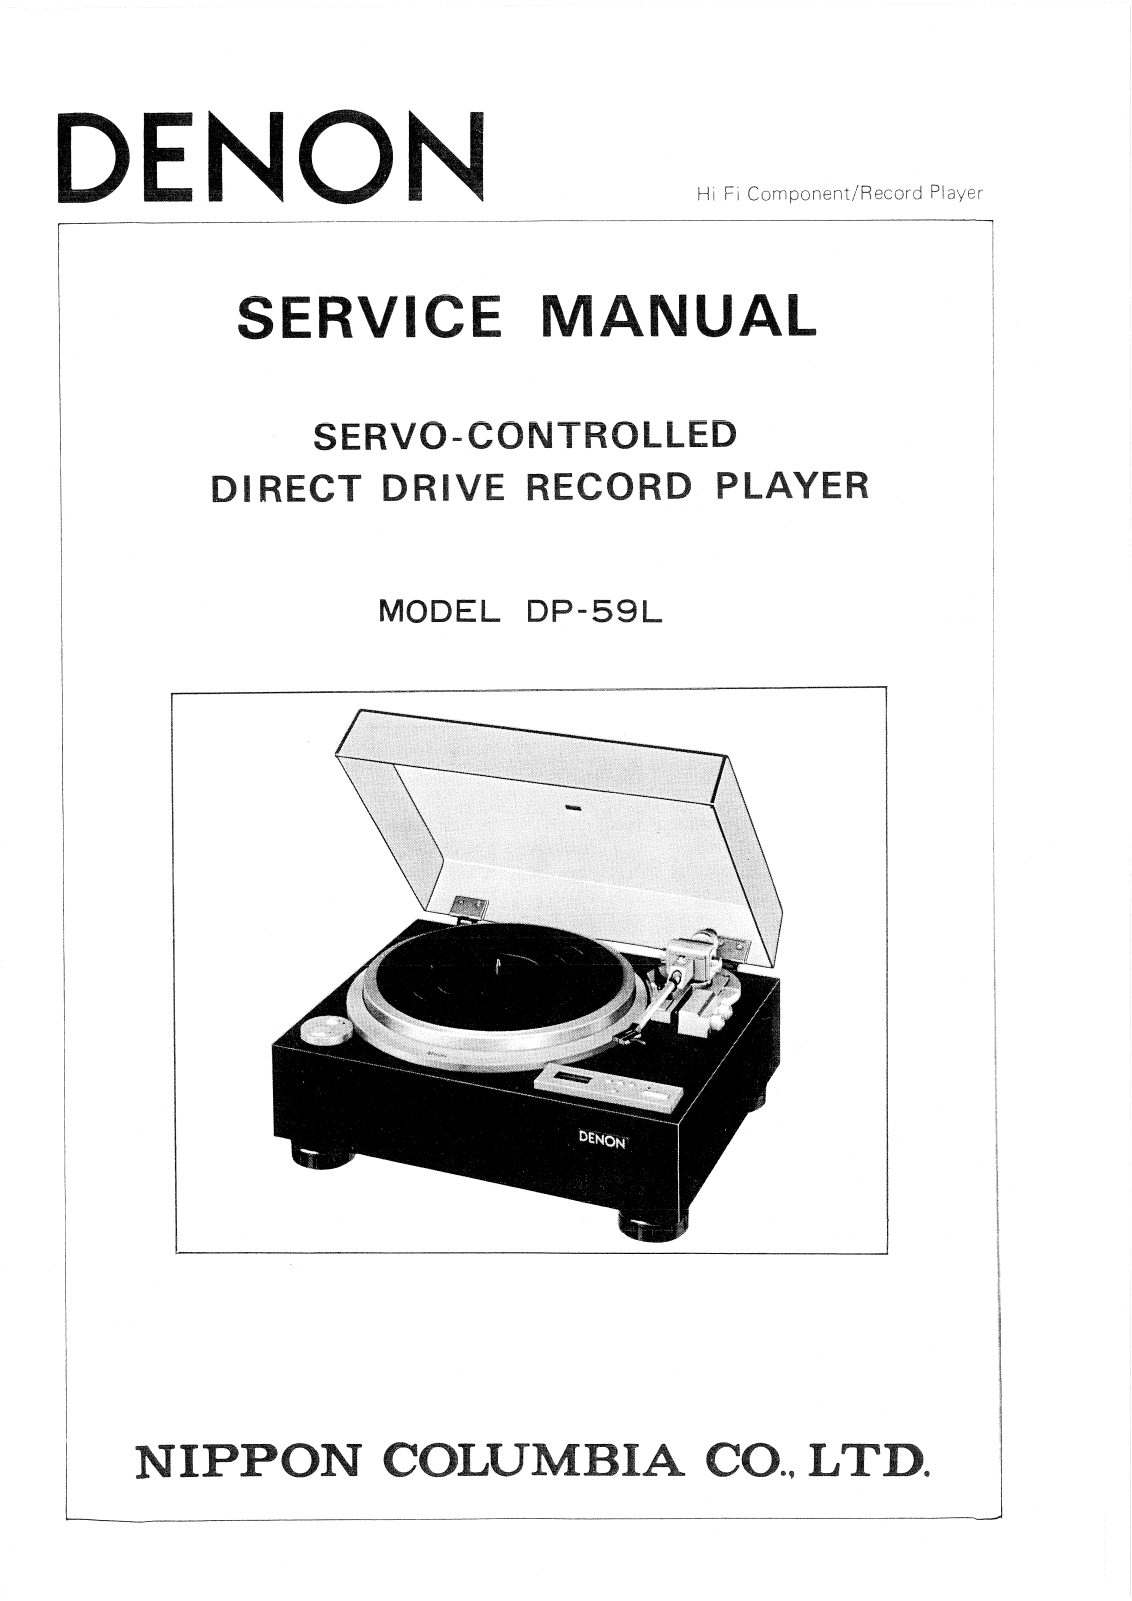 Denon DP-59L Service Manual